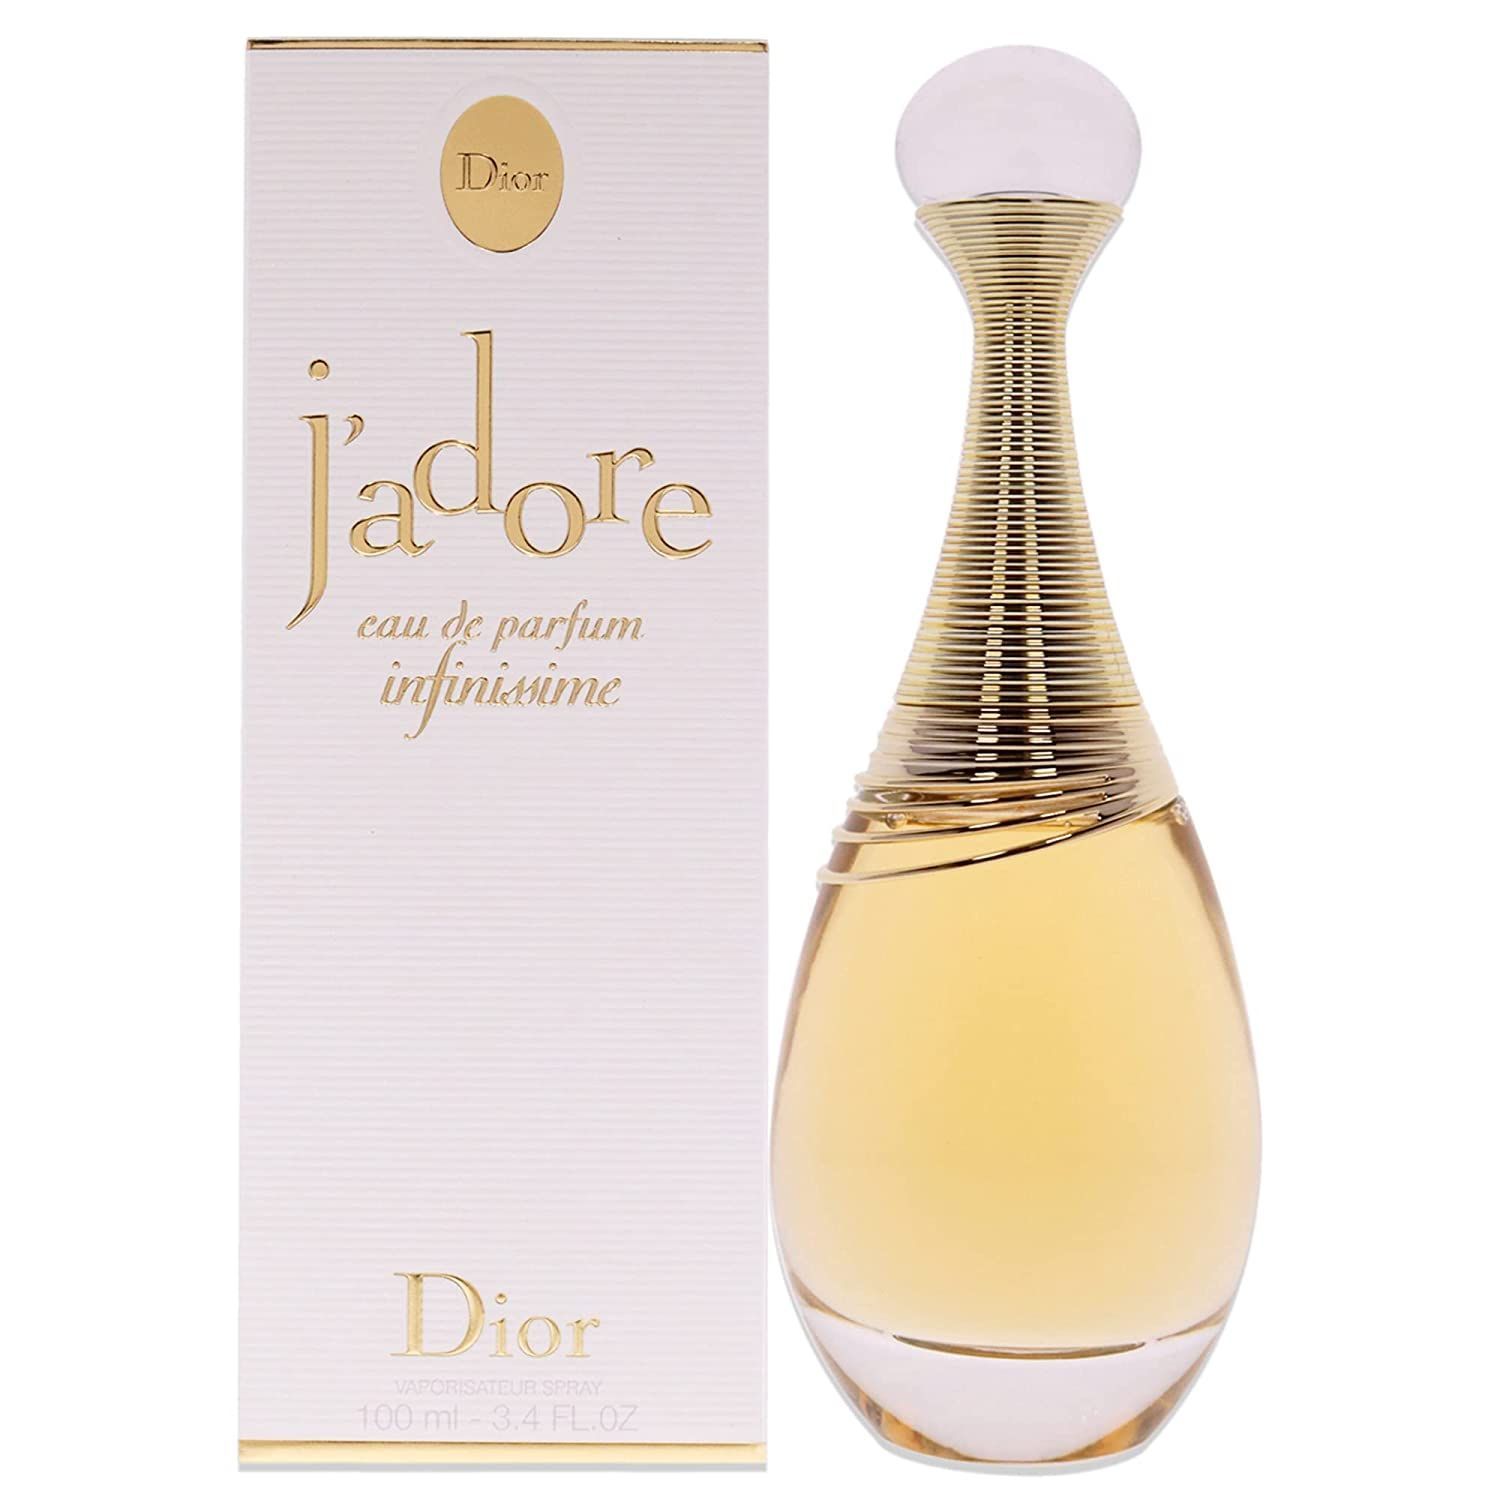 Dior j adore цены. Christian Dior Jadore 100 ml. Christian Dior Jadore Infinissime. Christian Dior j'adore, 100 ml. Dior Jadore EDP.